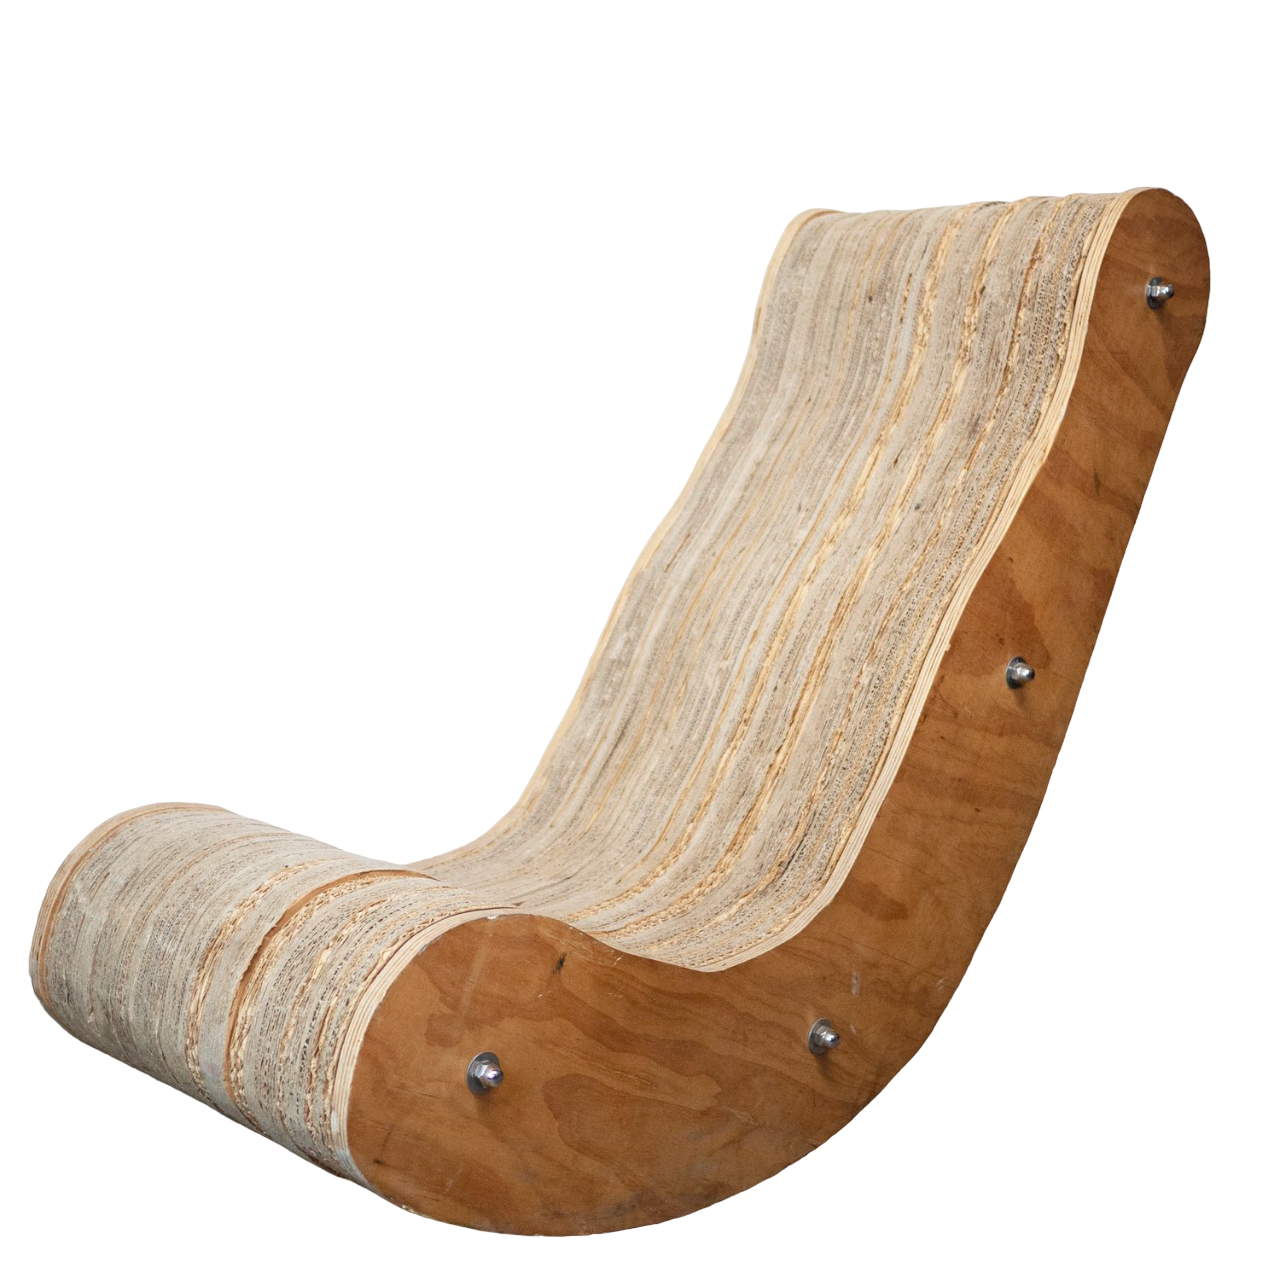 Sculpted Cardboard & Plywood Lounge Chair, 2000s - Hunt Vintage